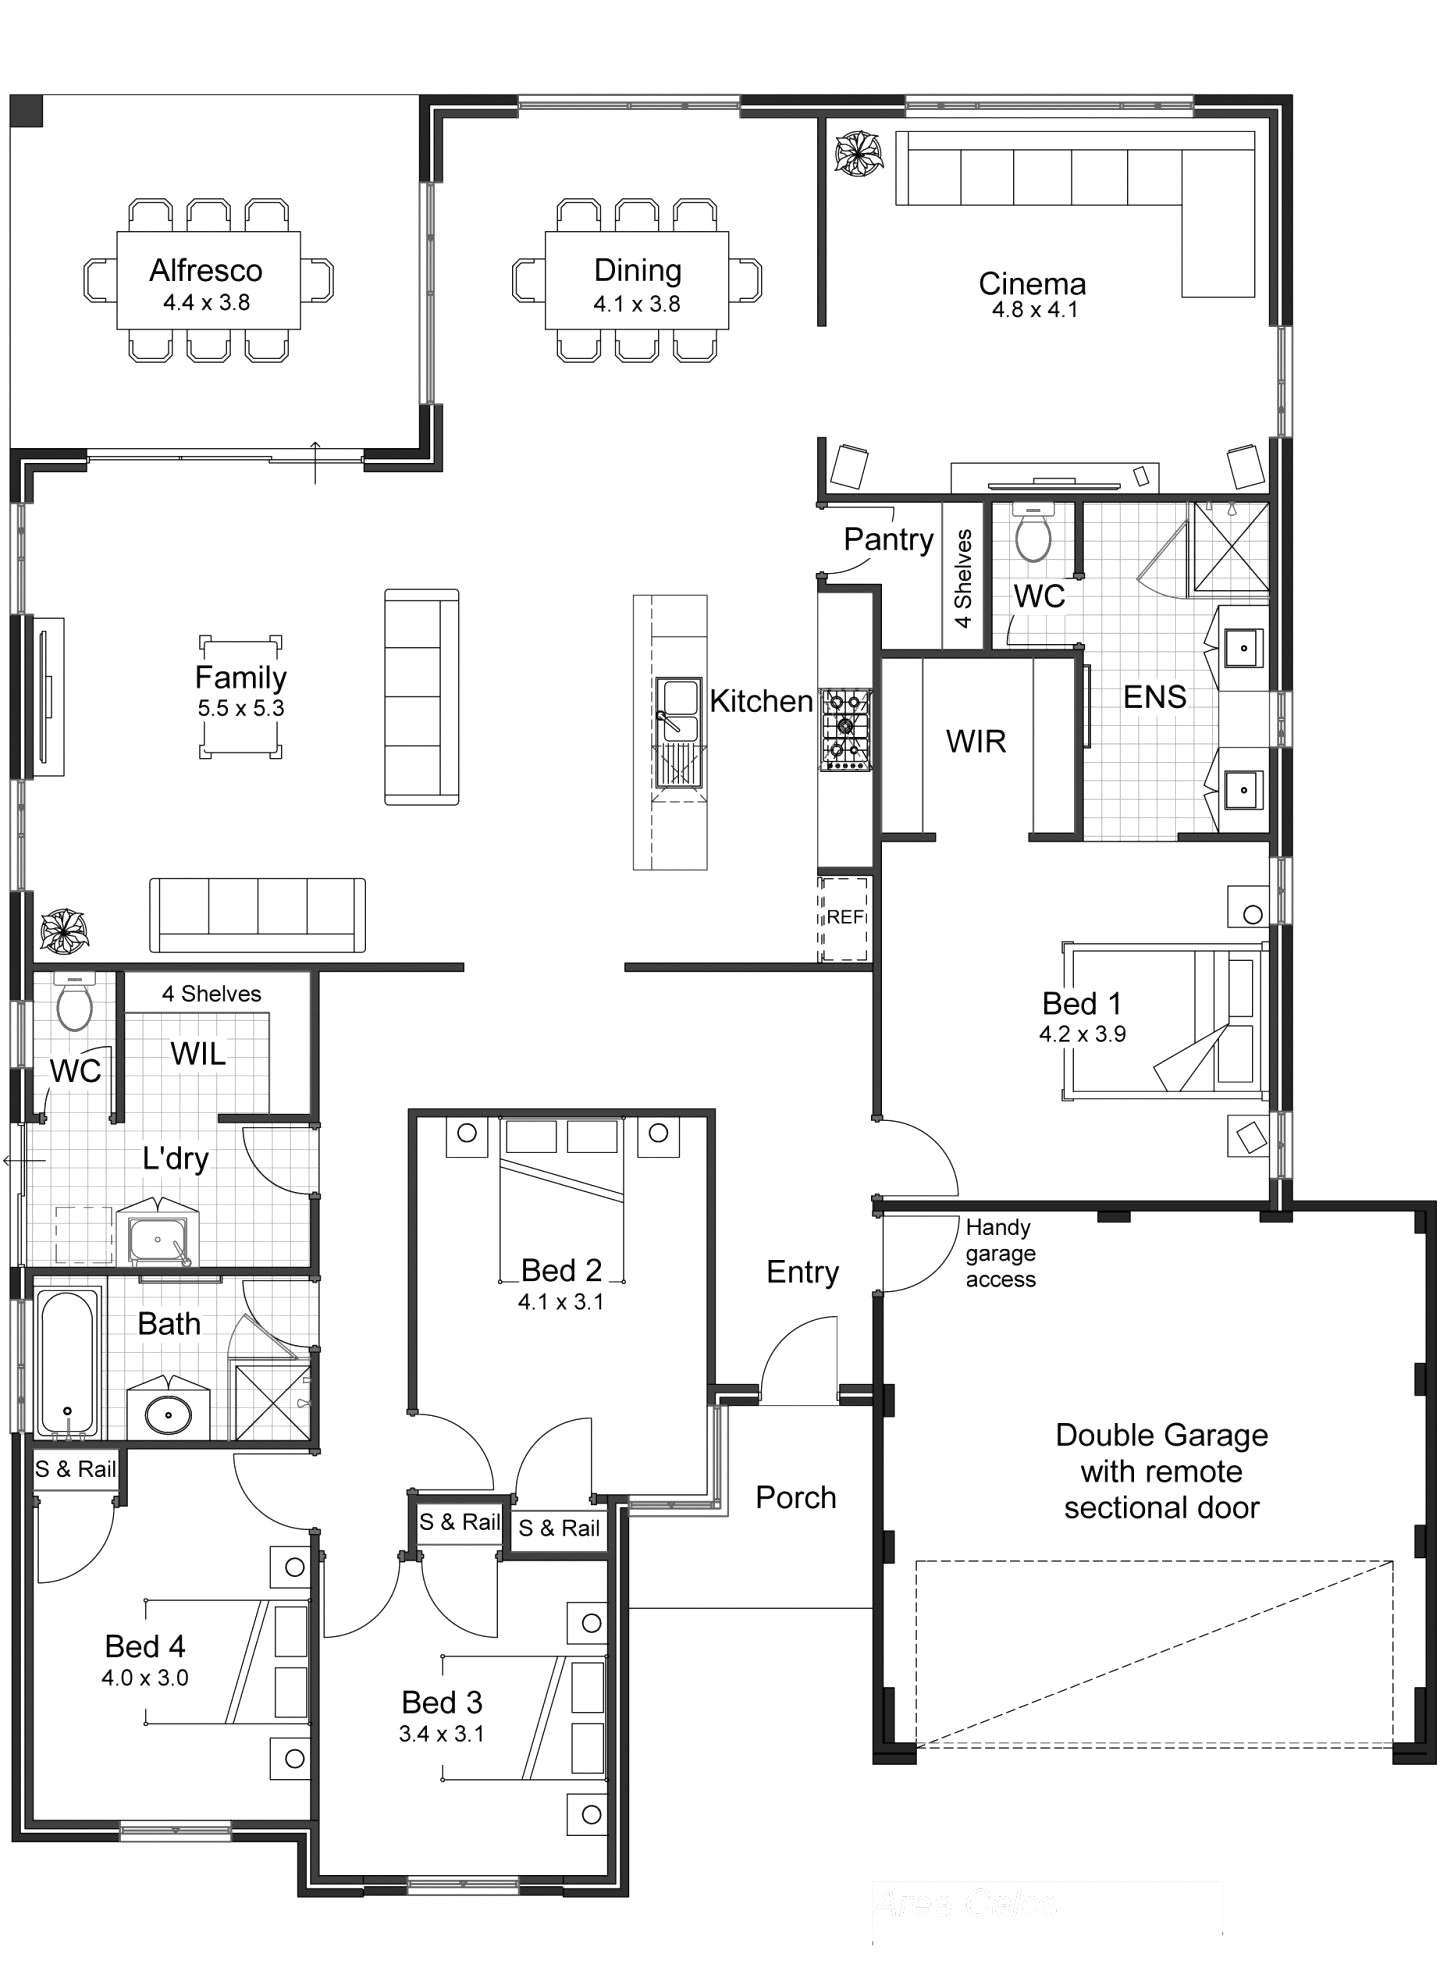 7 bedroom house plans australia